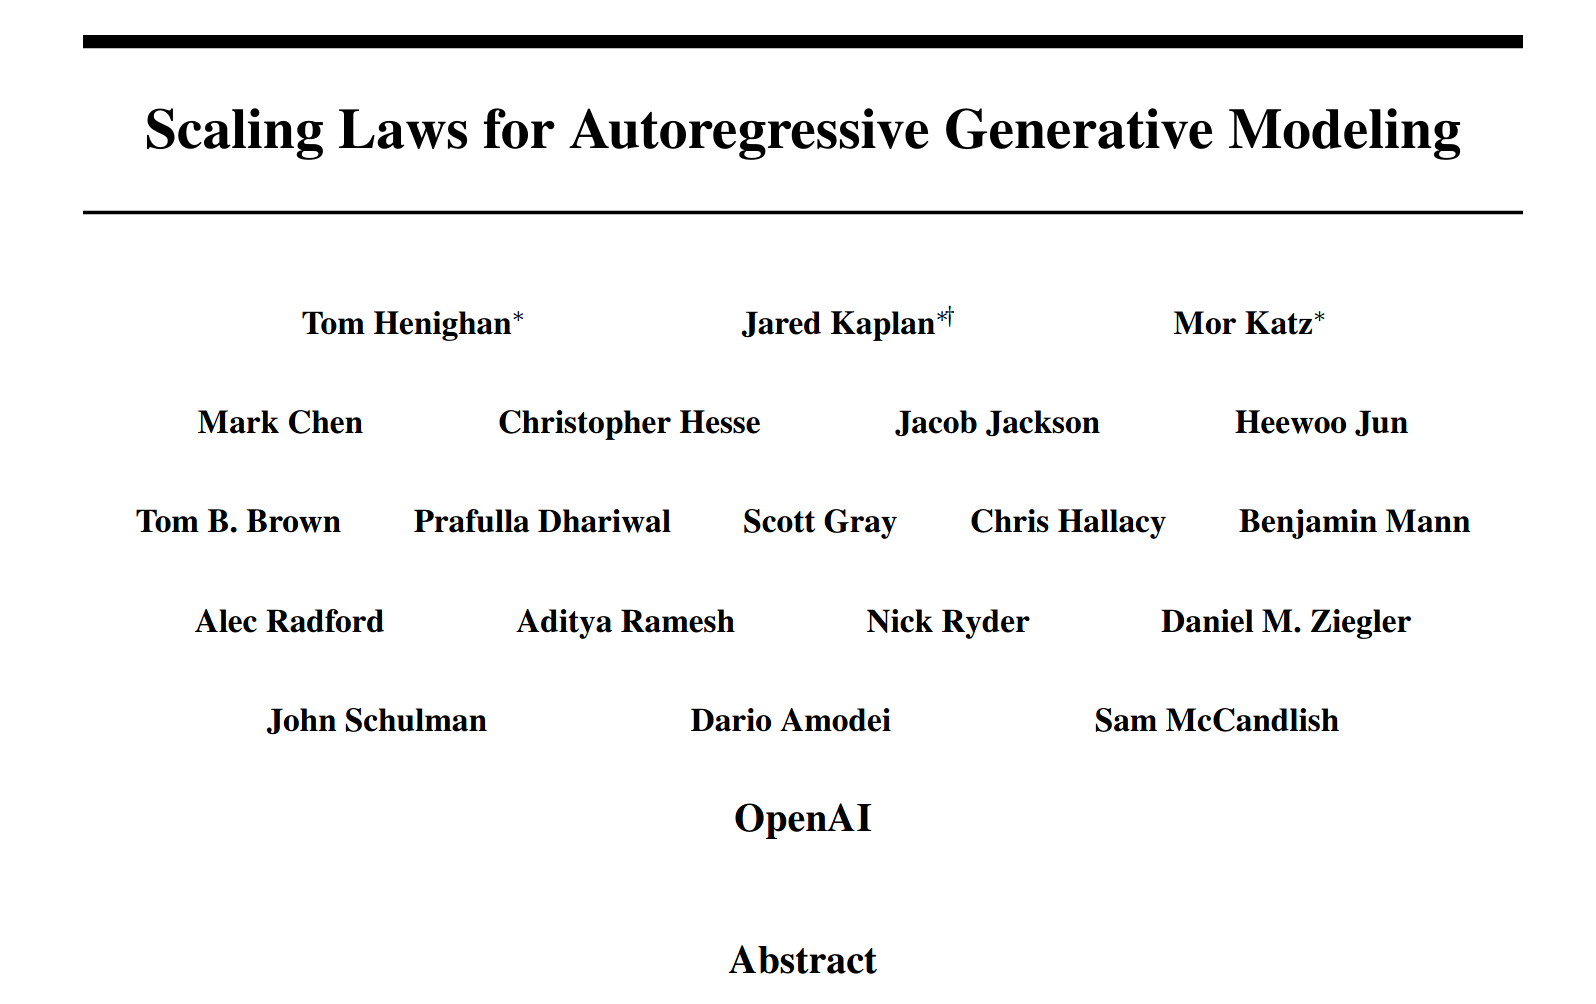 OpenAI's “Scaling Laws for Autoregressive Generative Modeling”